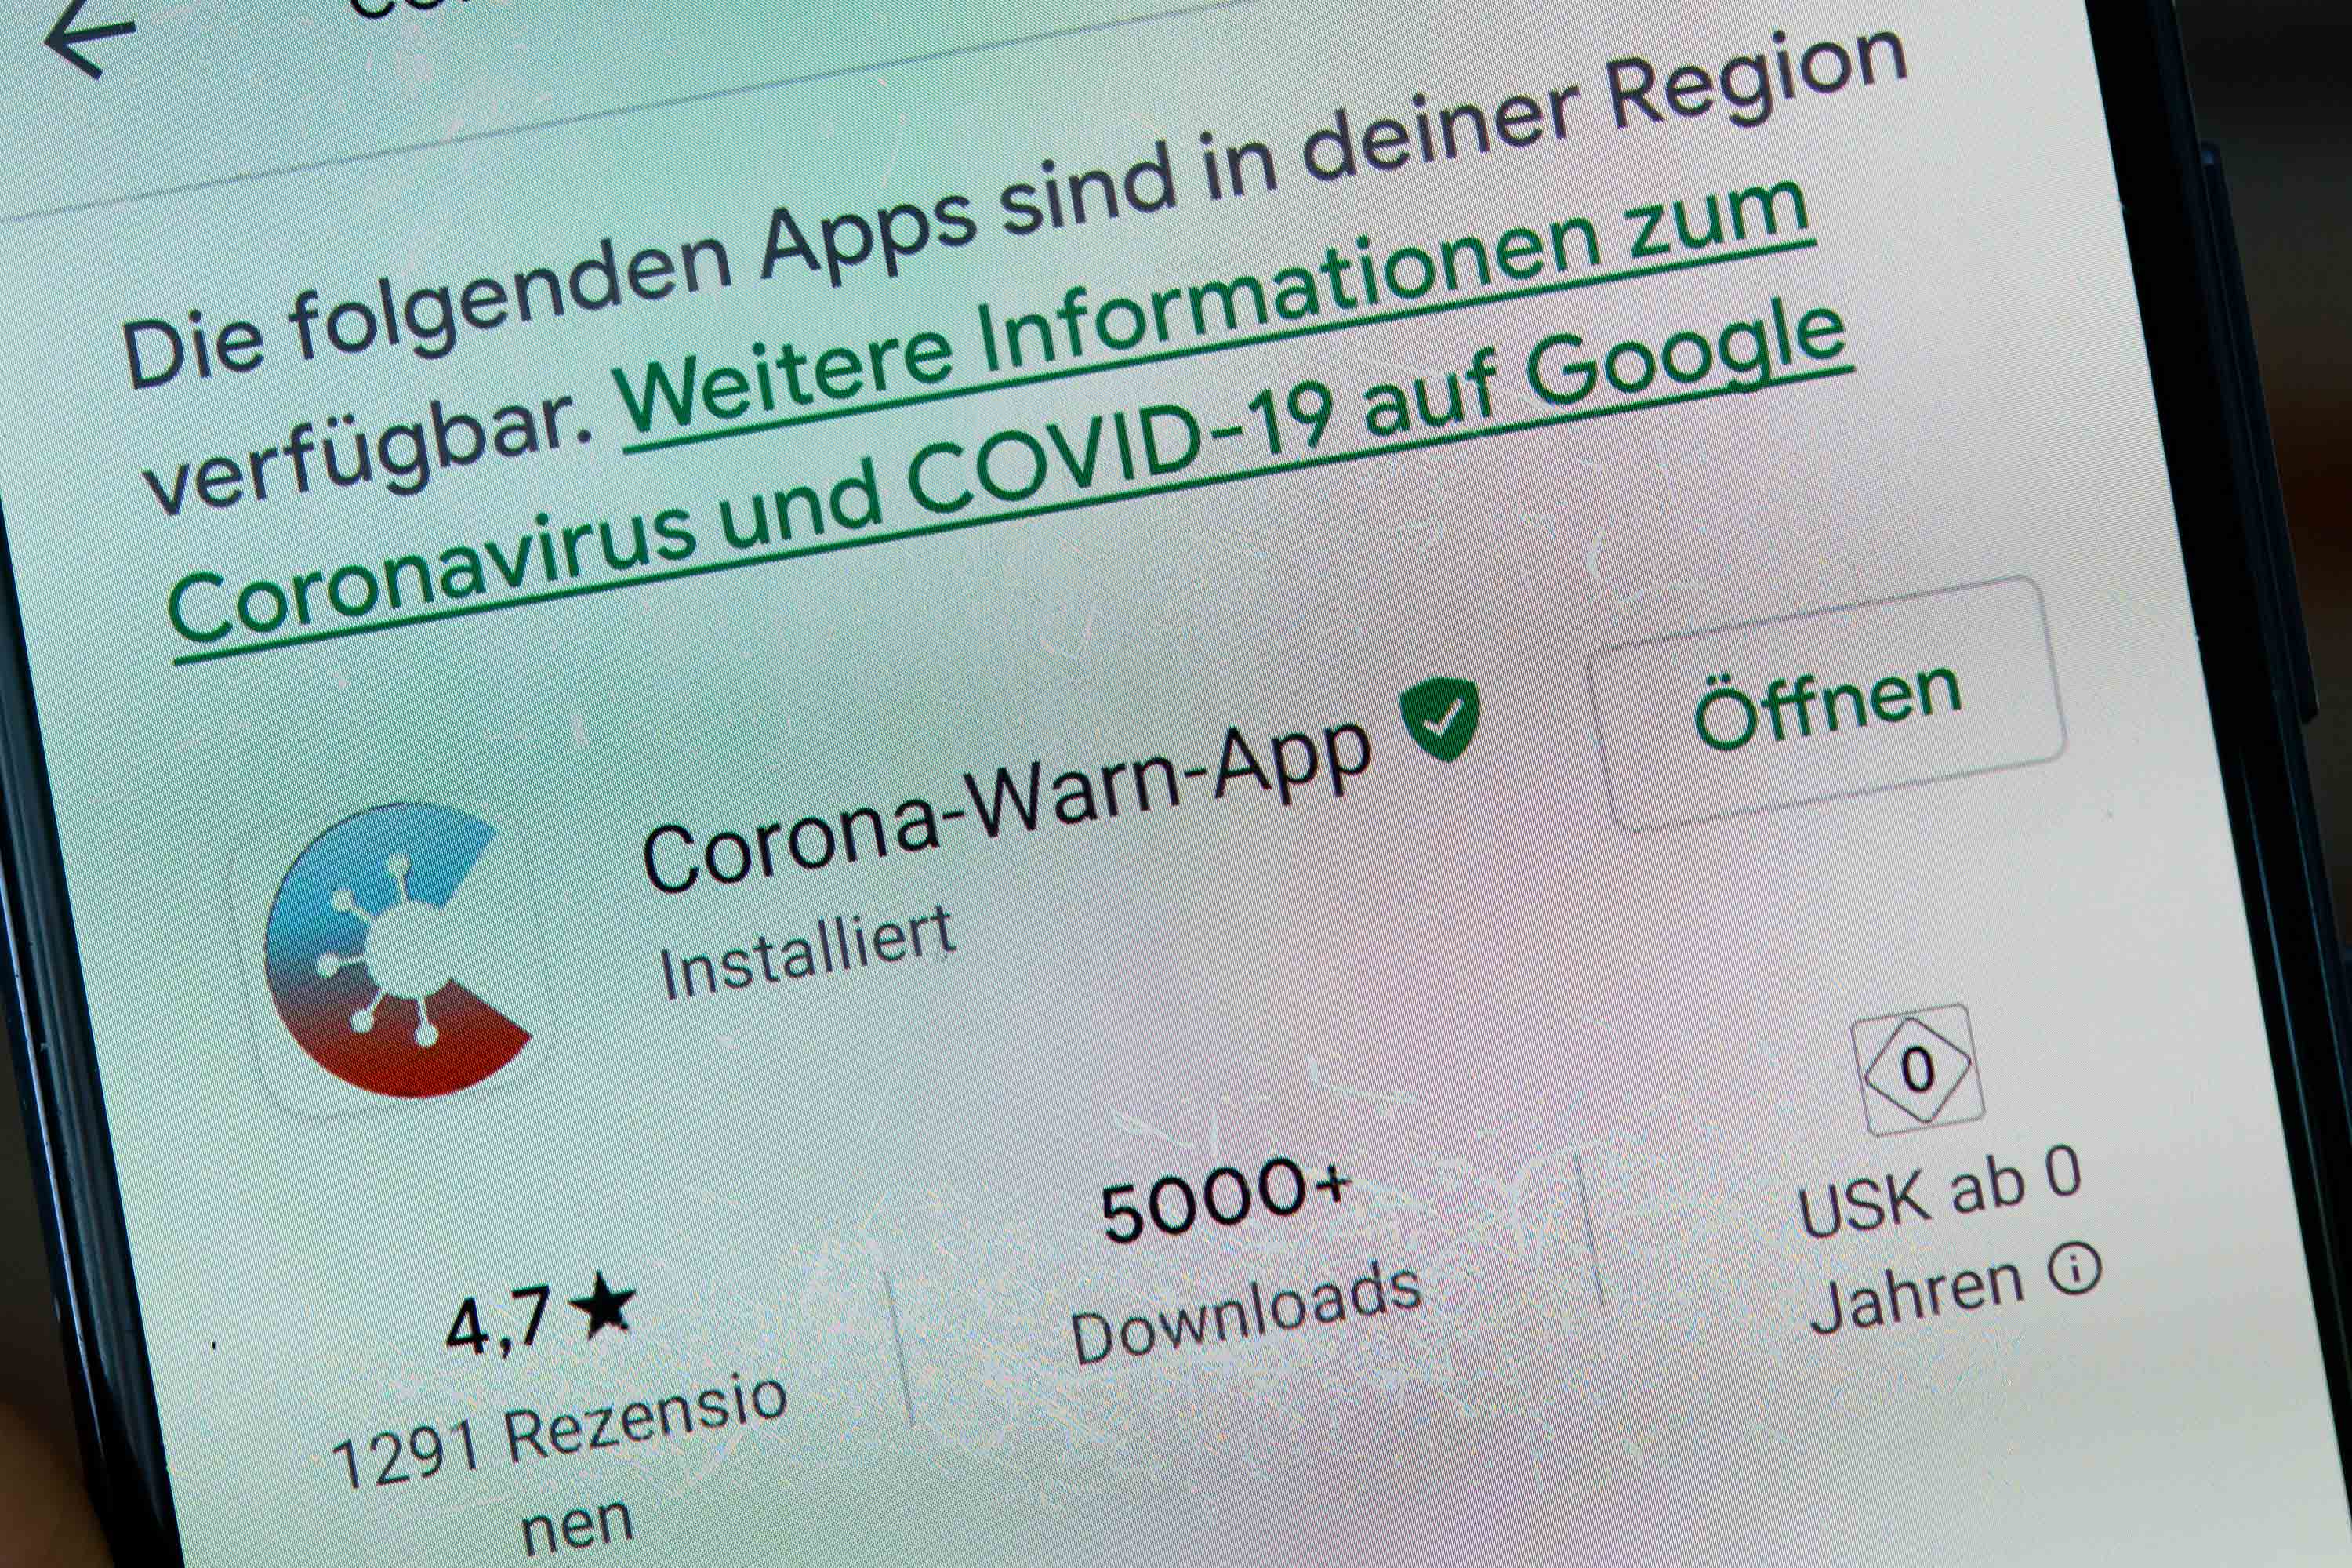 Germany's coronavirus warning app displayed on a phone screen in Dortmund, Germany, on Tuesday, June 16.